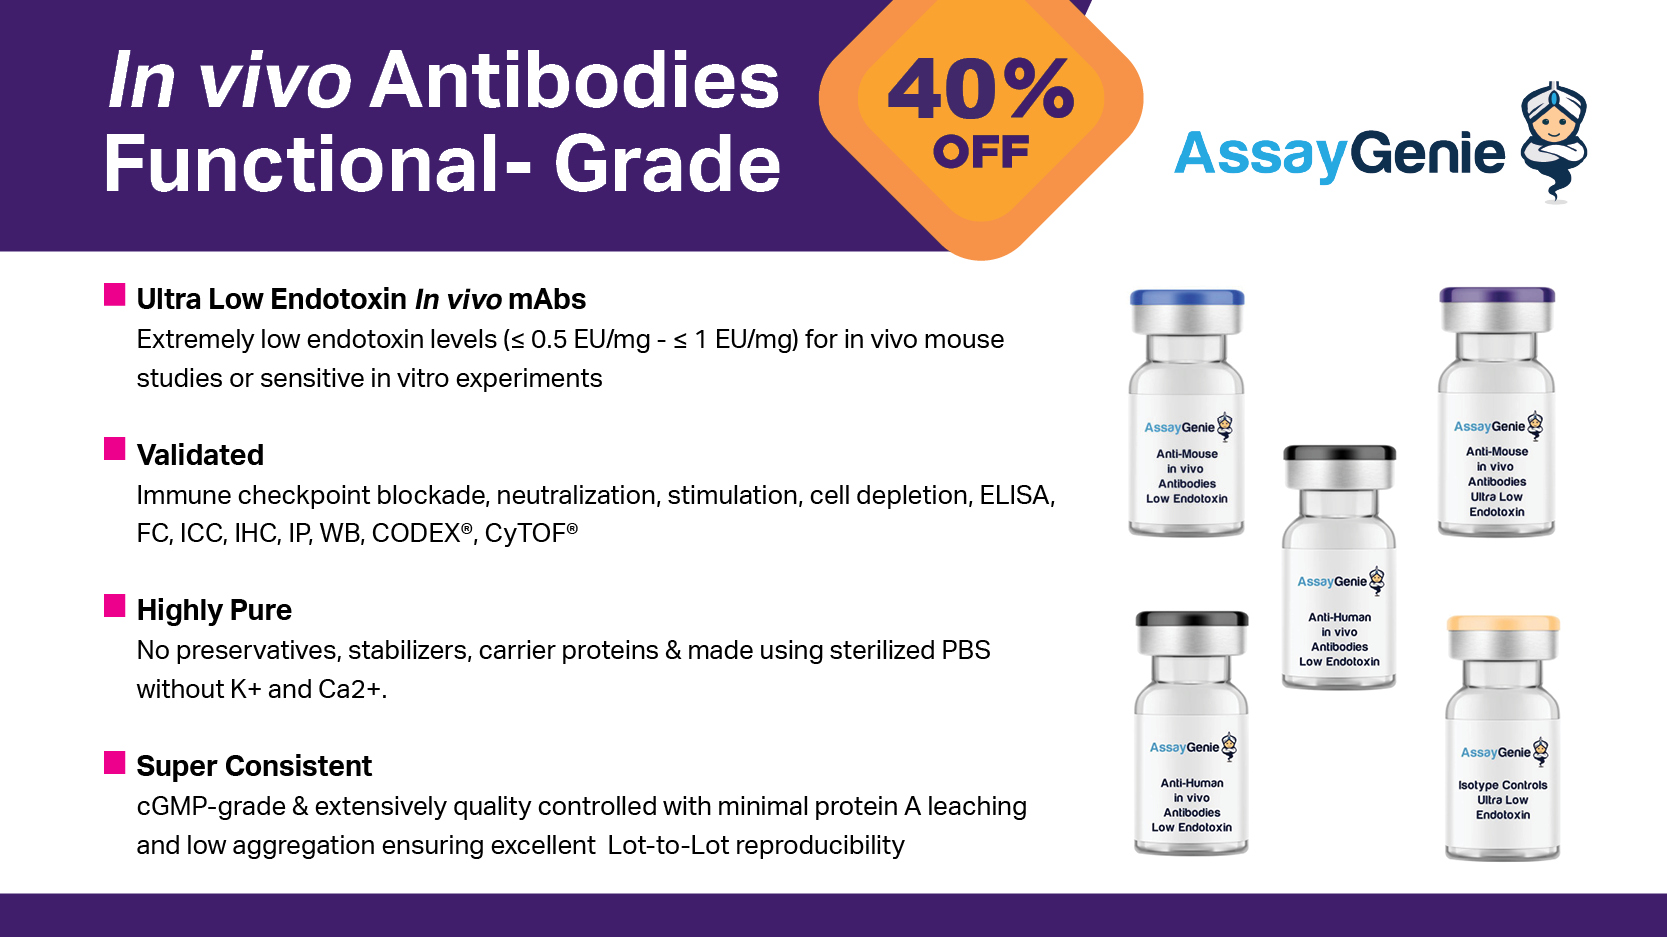 Get 40% OFF the Assay Genie In vivo Antibodies Functional Grade Kits